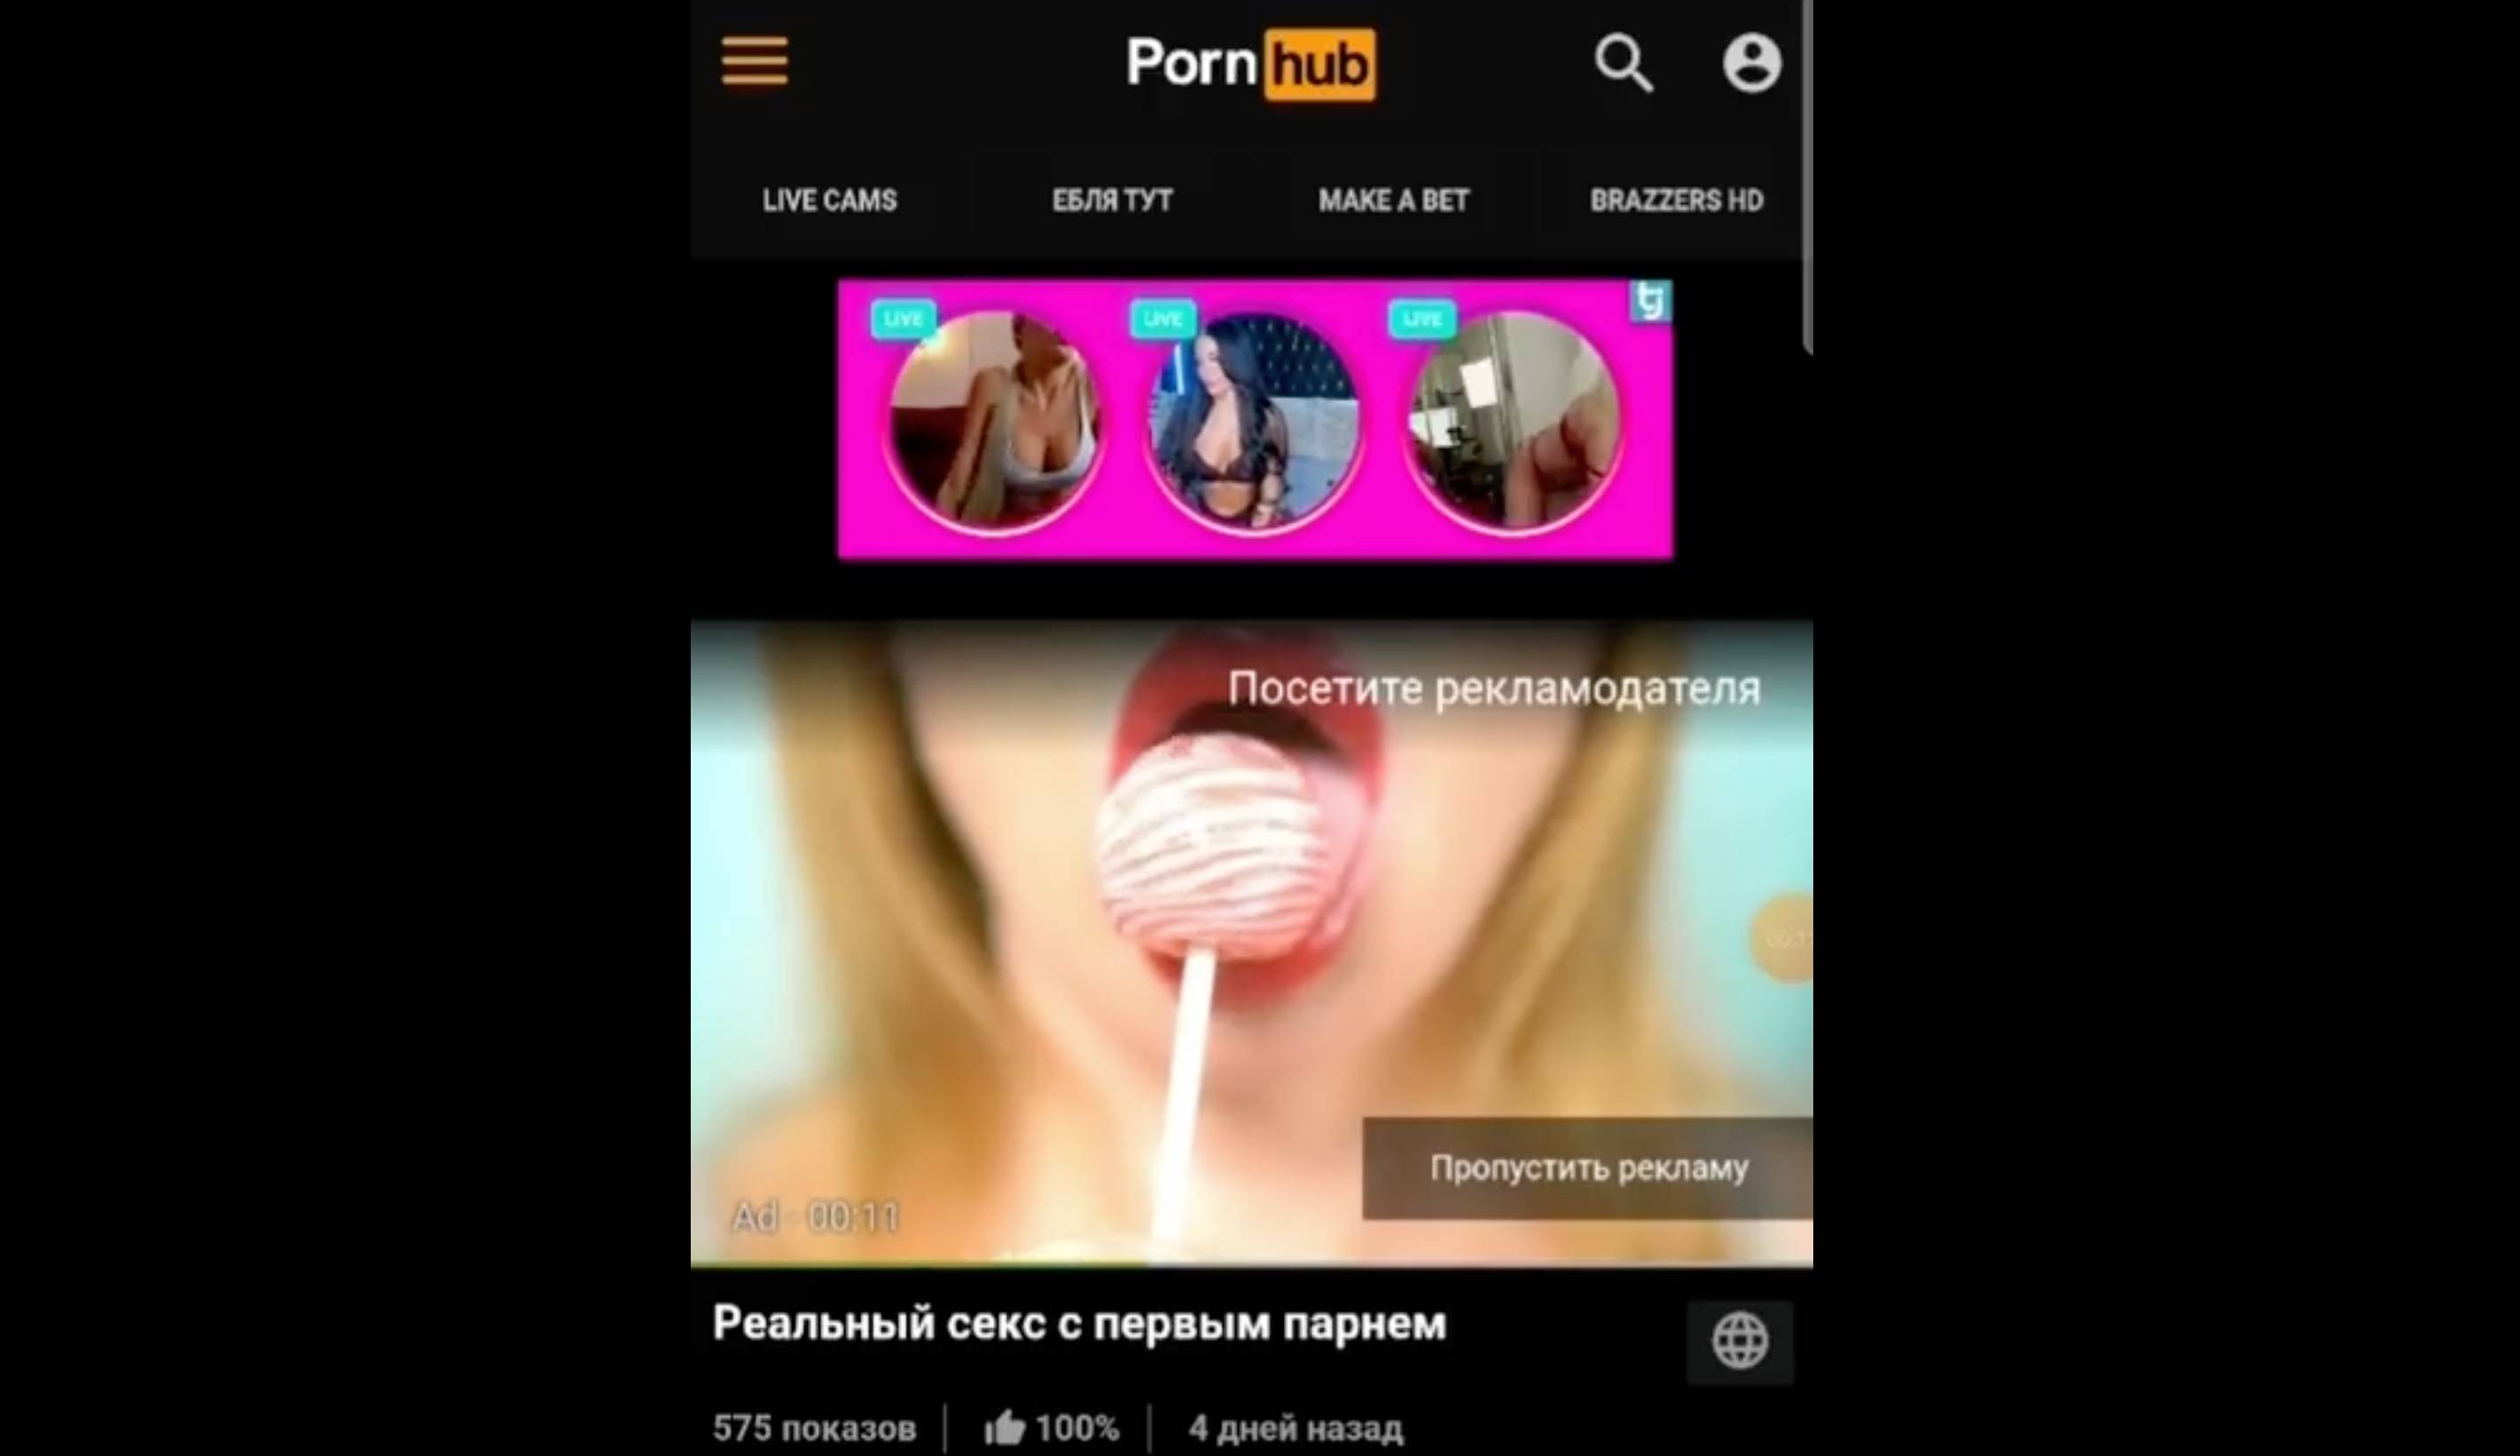 Porhtube - Notorious Russian Mercenaries Wagner Are Advertising on Pornhub